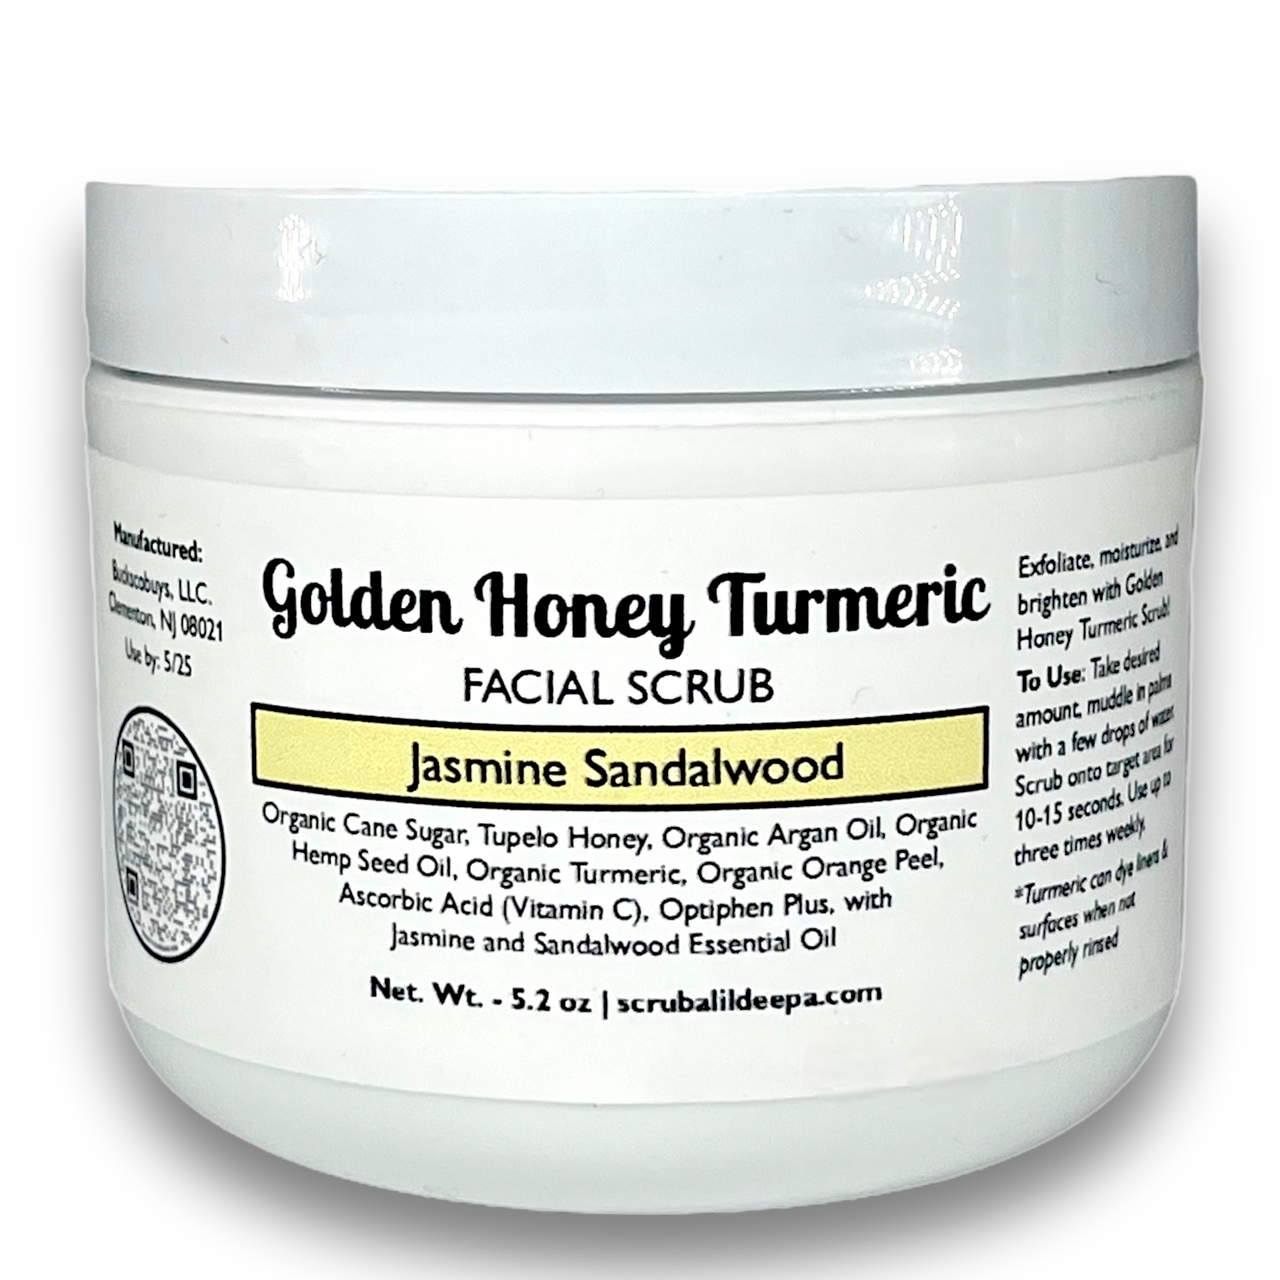 Golden Honey Turmeric Facial Scrub - Jasmine Sandalwood